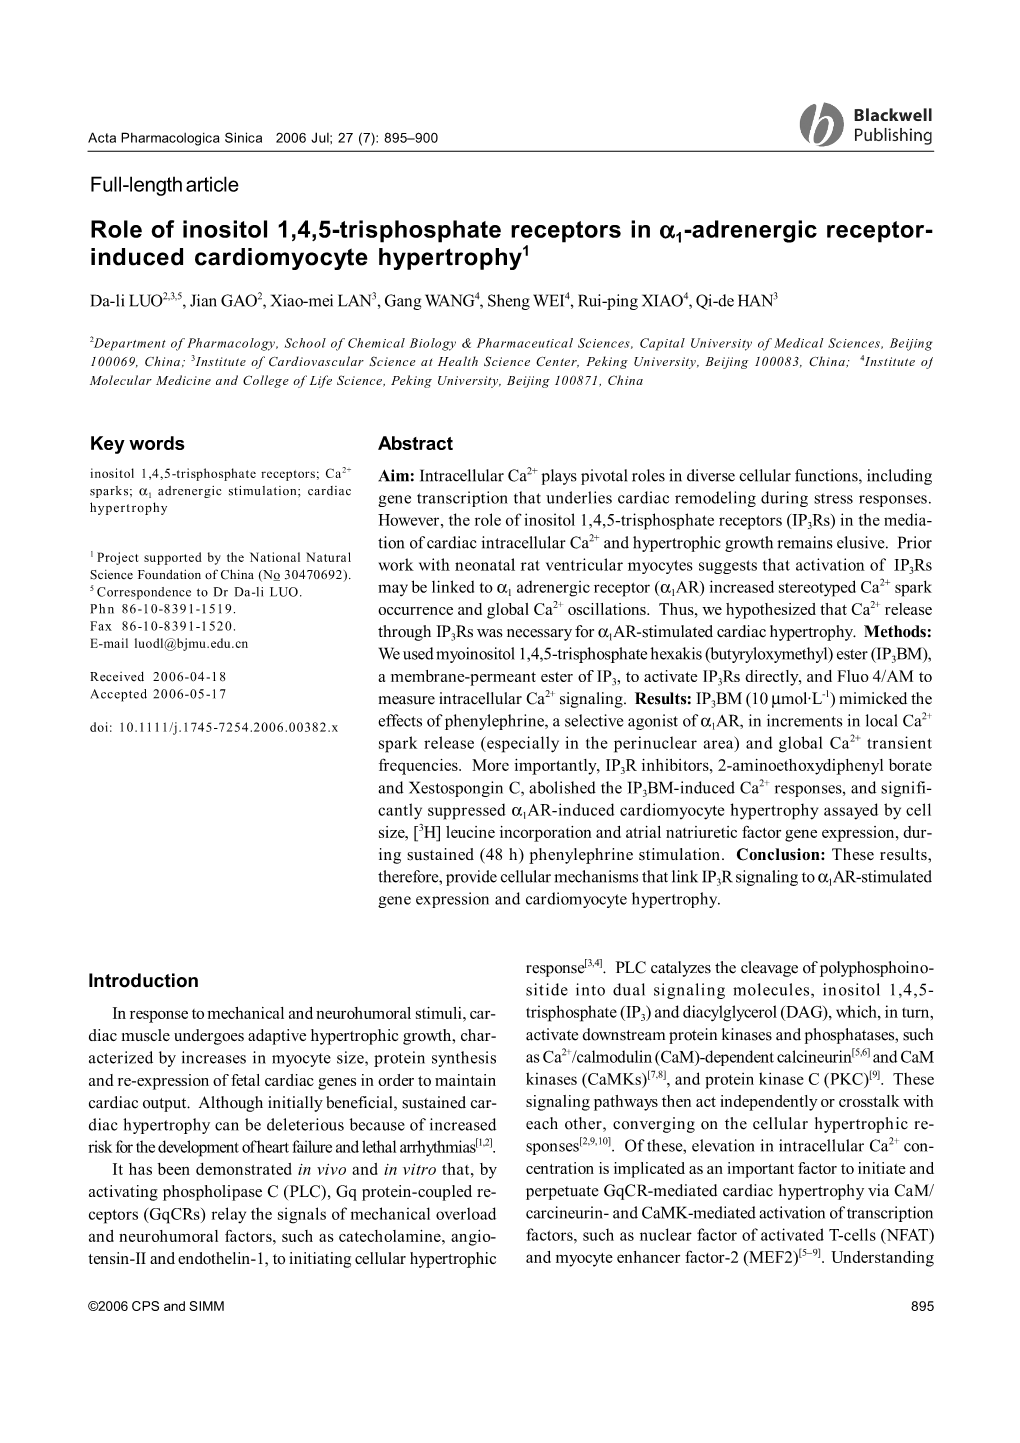 Role of Inositol 1,4,5-Trisphosphate Receptors in Α1-Adrenergic